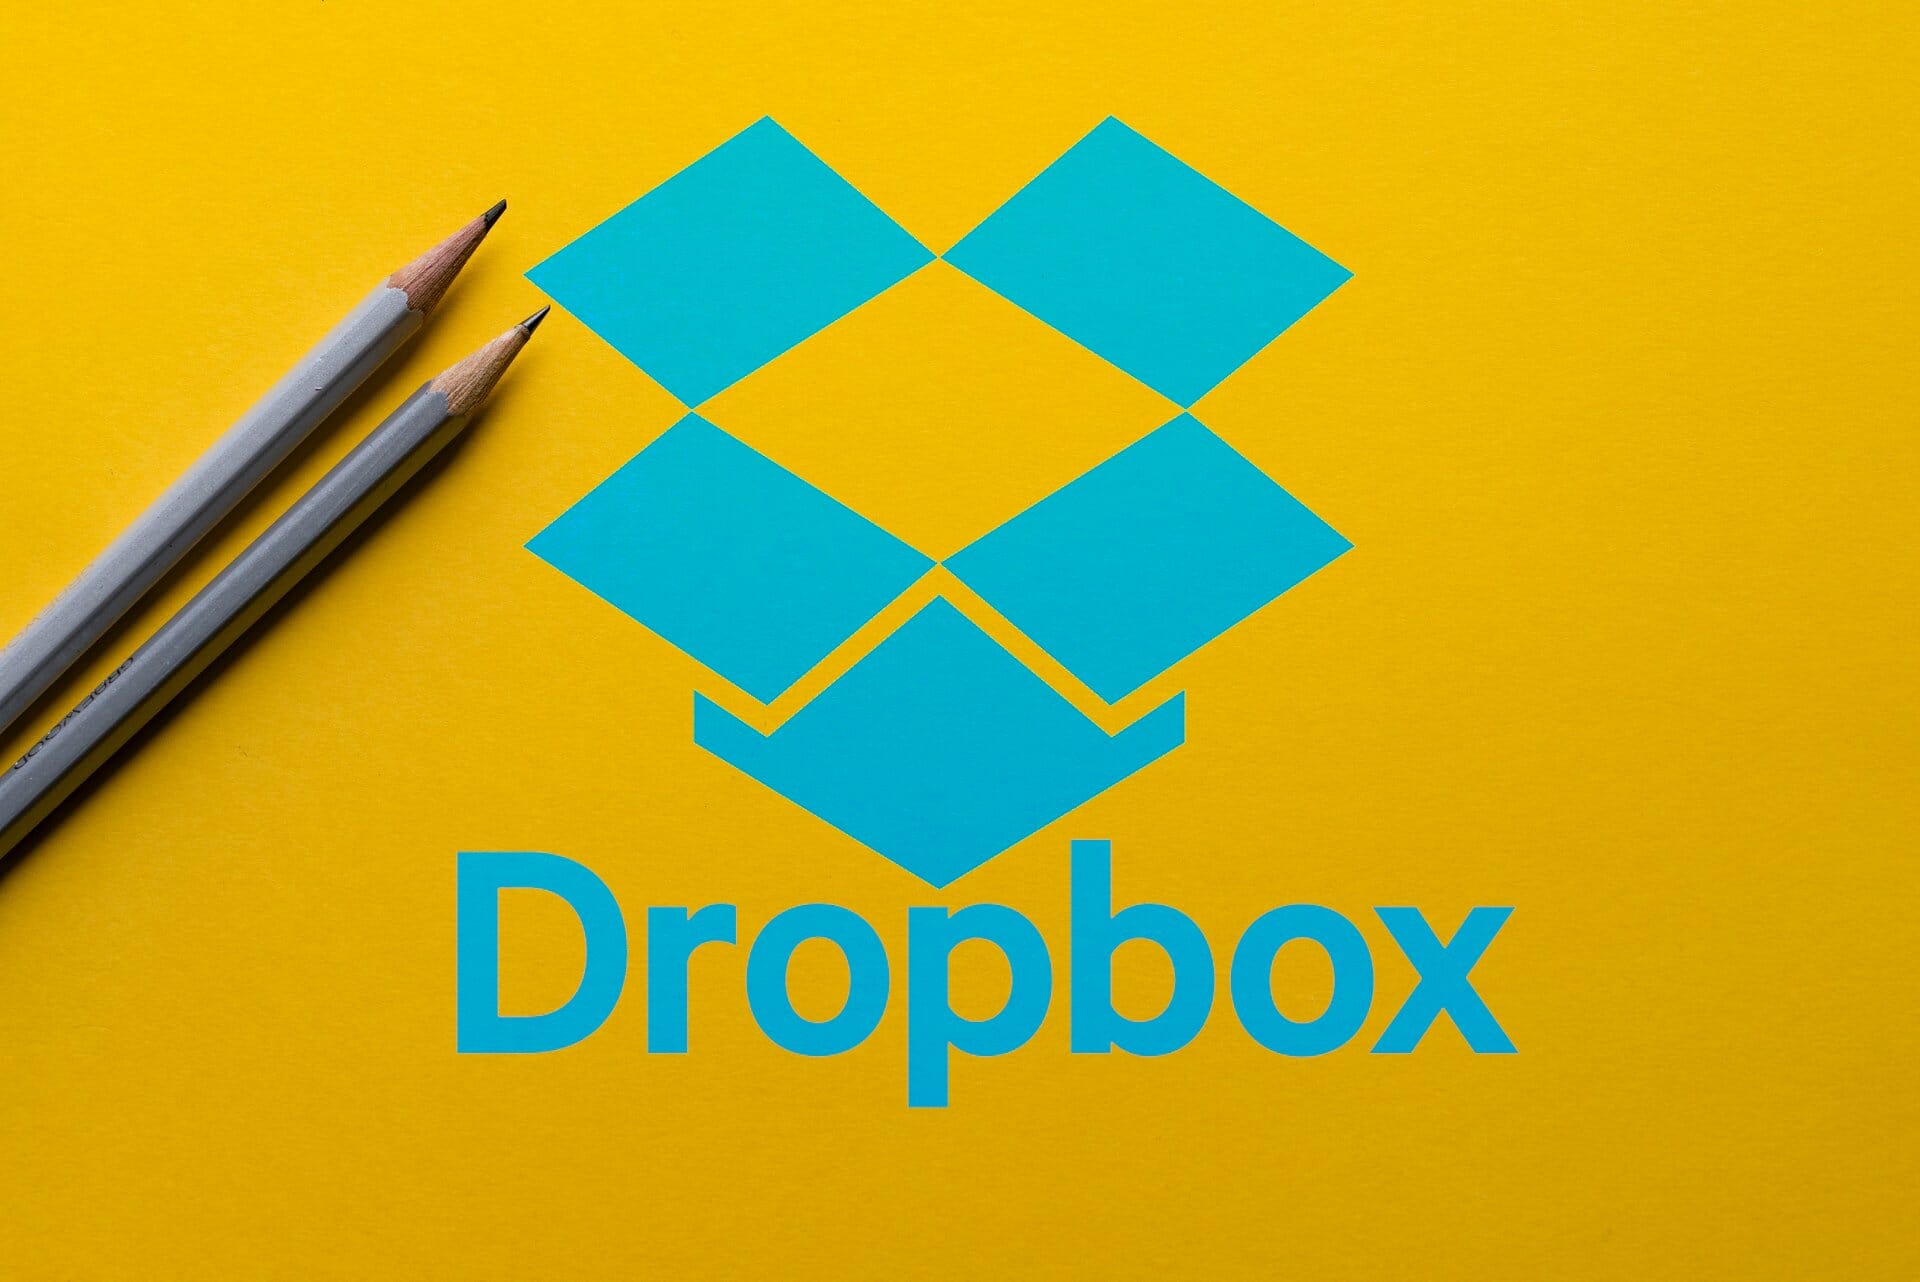 Dropbox image compression